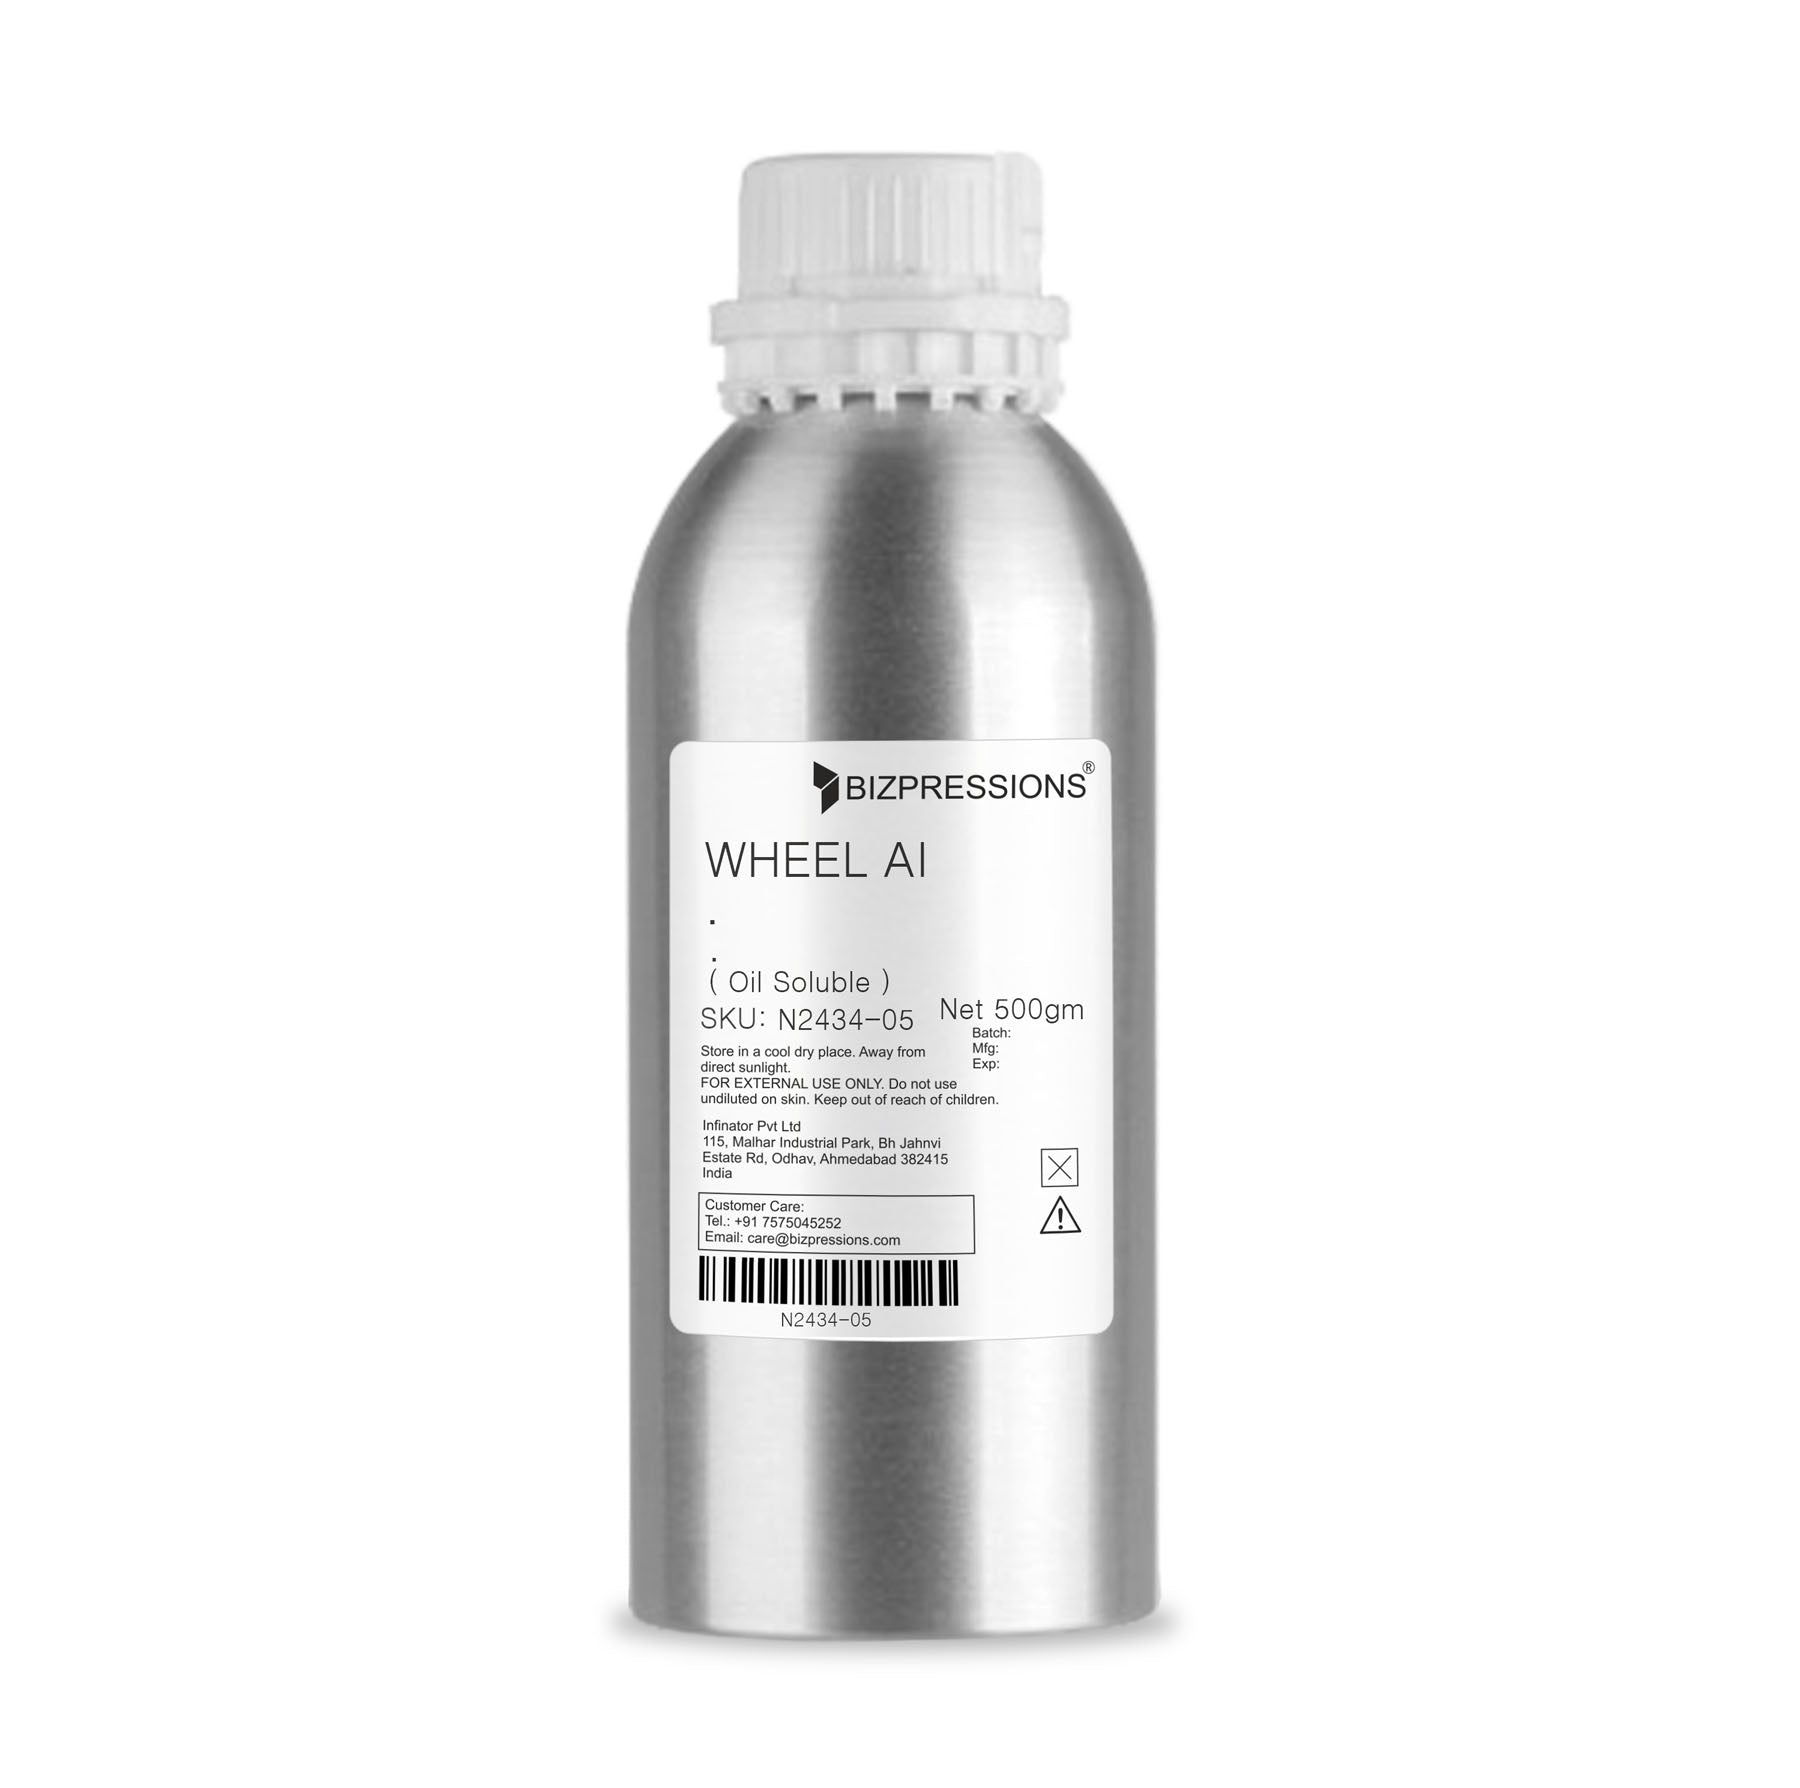 WHEEL AI - Fragrance ( Oil Soluble ) - 500 gm